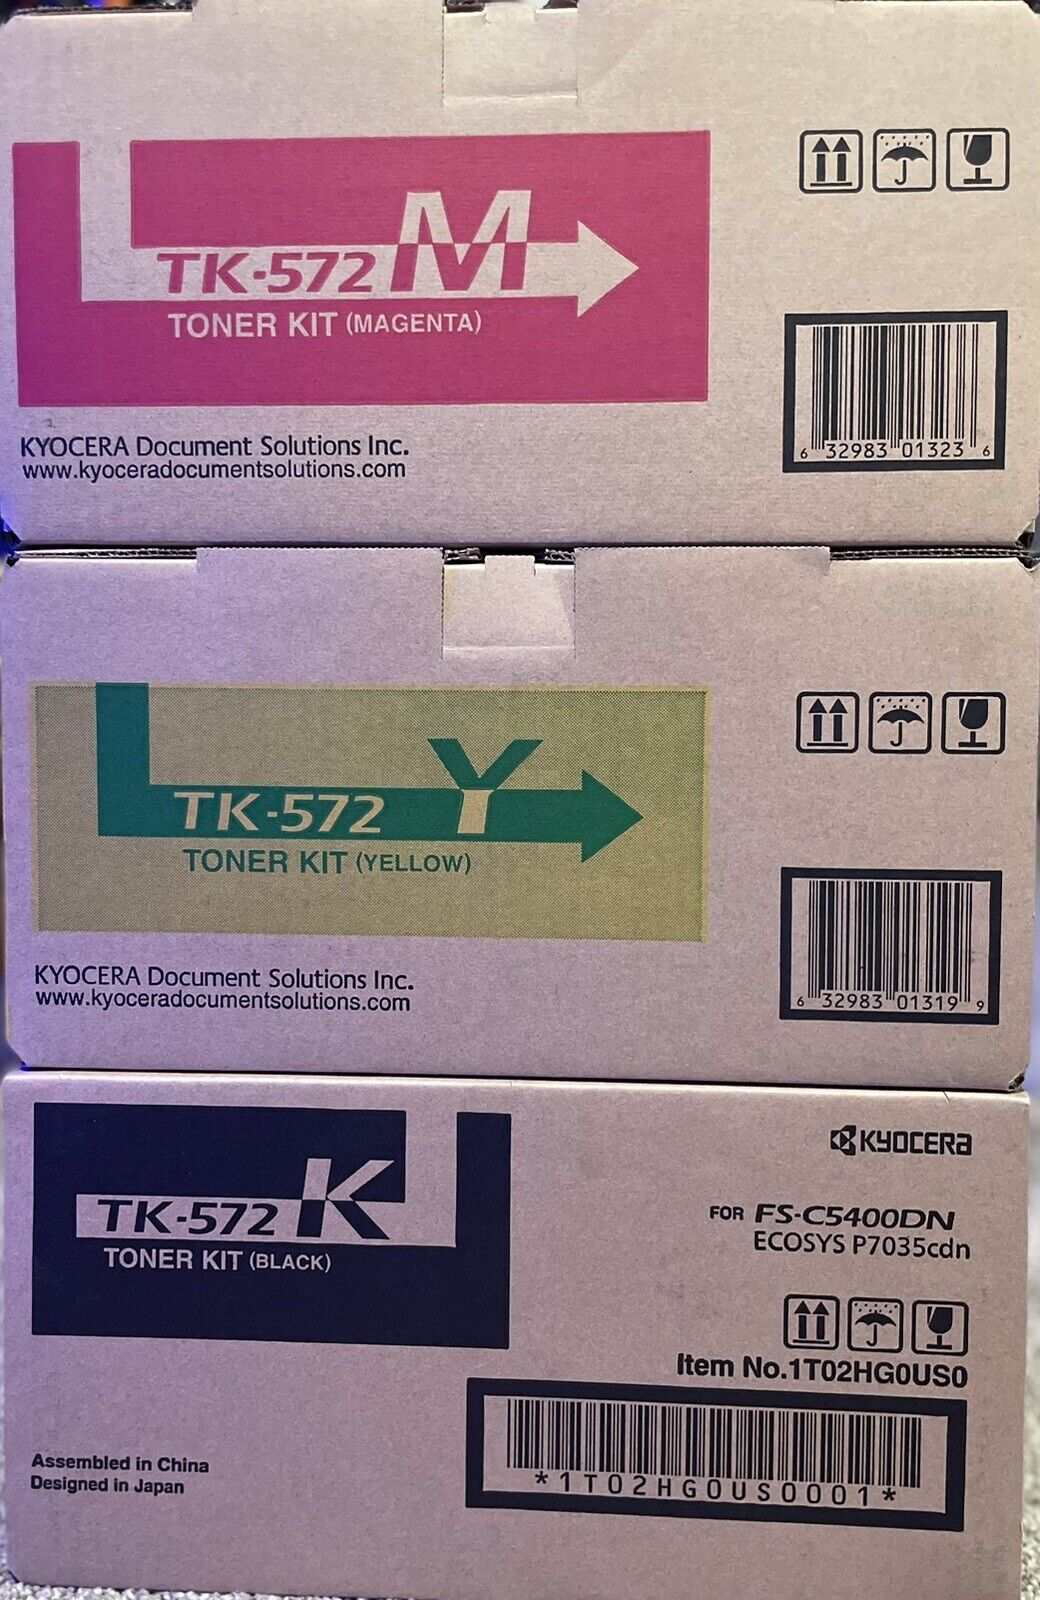 Kyocera TK-572-M,K,Y Toner Cartridge Set for FS-C5400DN. BRAND NEW, 